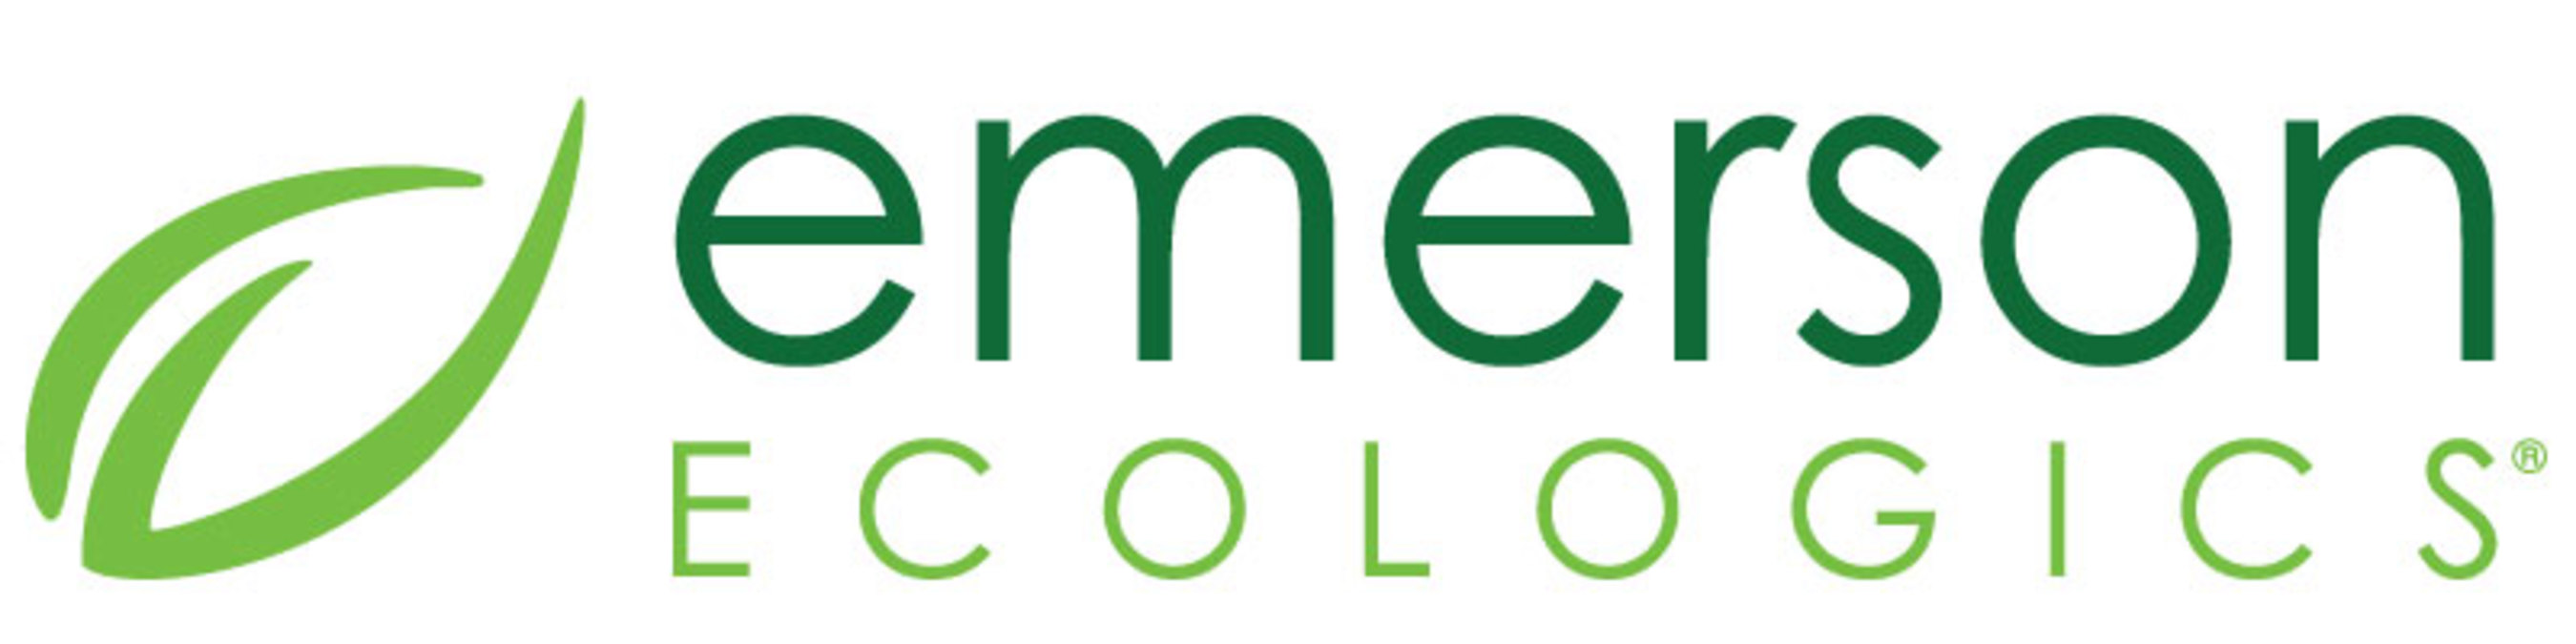 Emerson Ecologics logo.